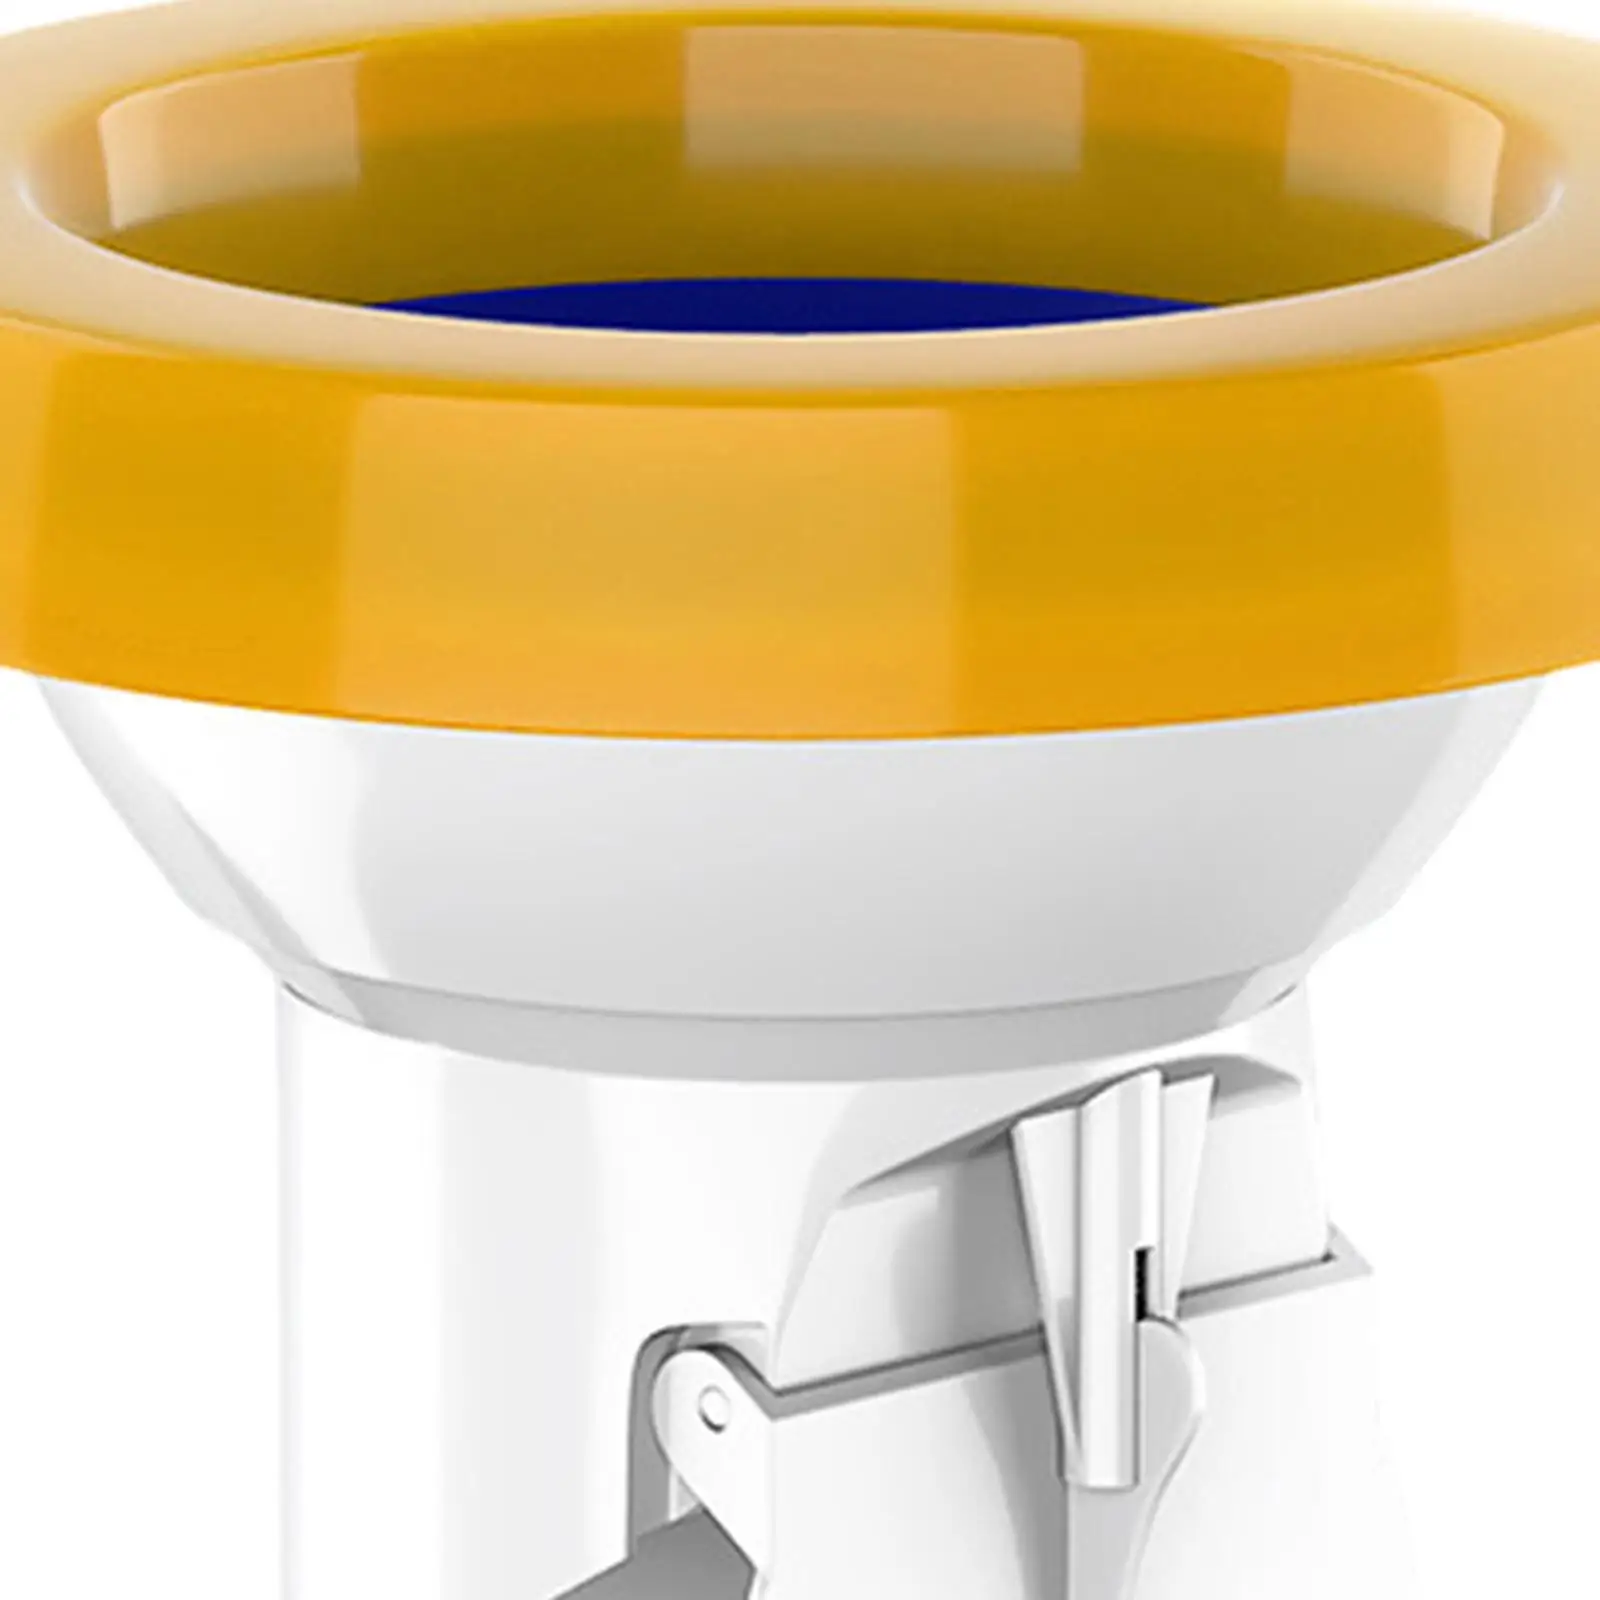 Toilet Flange Ring Easy Install Anti Blocking Odor Prevent Plug for Bathroom